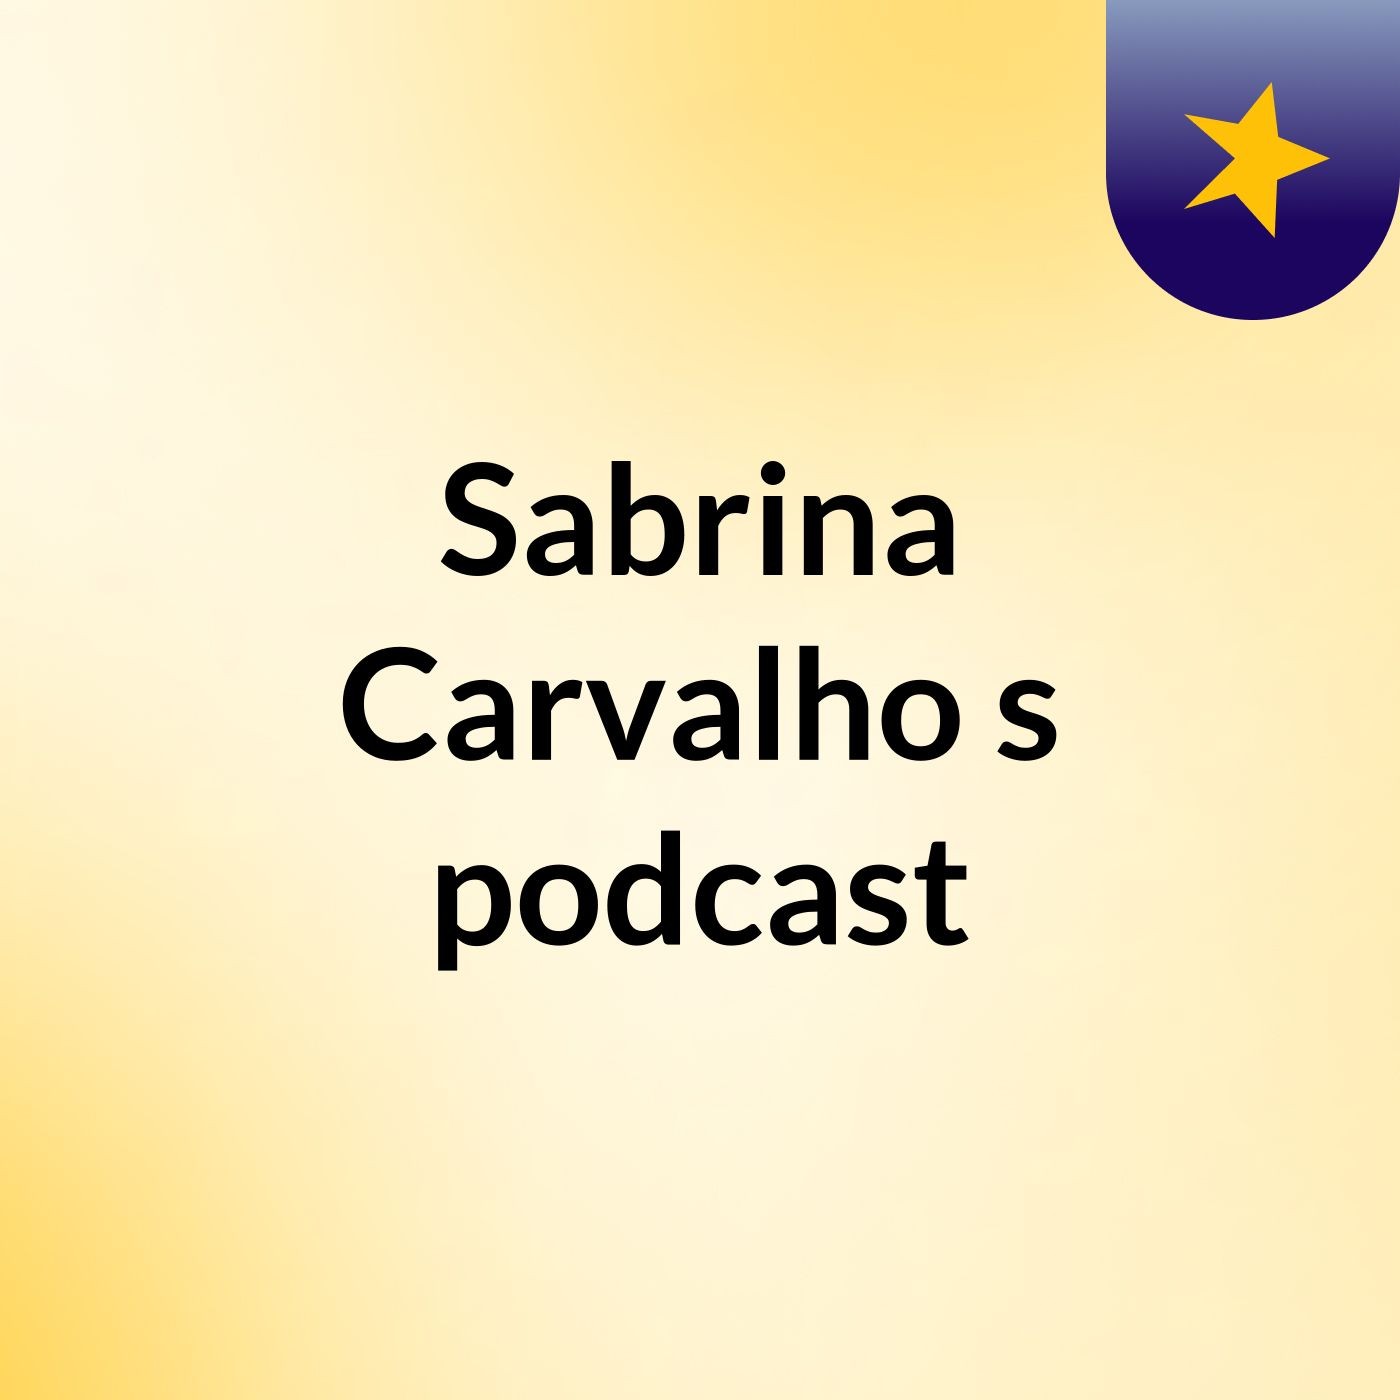 Sabrina Carvalho's podcast